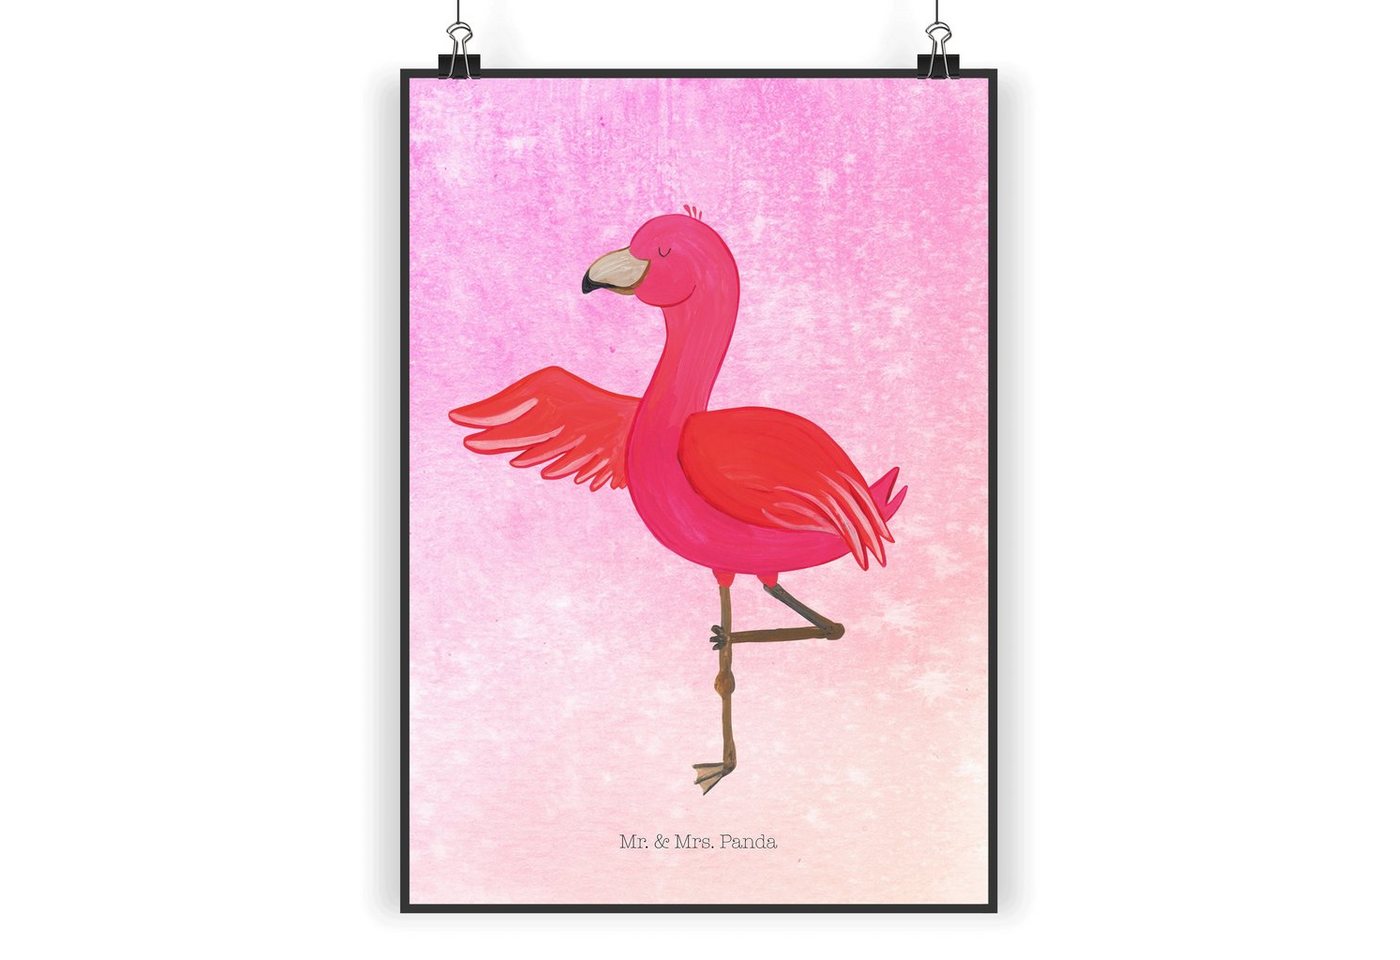 Mr. & Mrs. Panda Poster DIN A5 Flamingo Yoga - Aquarell Pink - Geschenk, Wanddekoration, Yogi, Flamingo Yoga (1 St), Detailreiche Motive von Mr. & Mrs. Panda